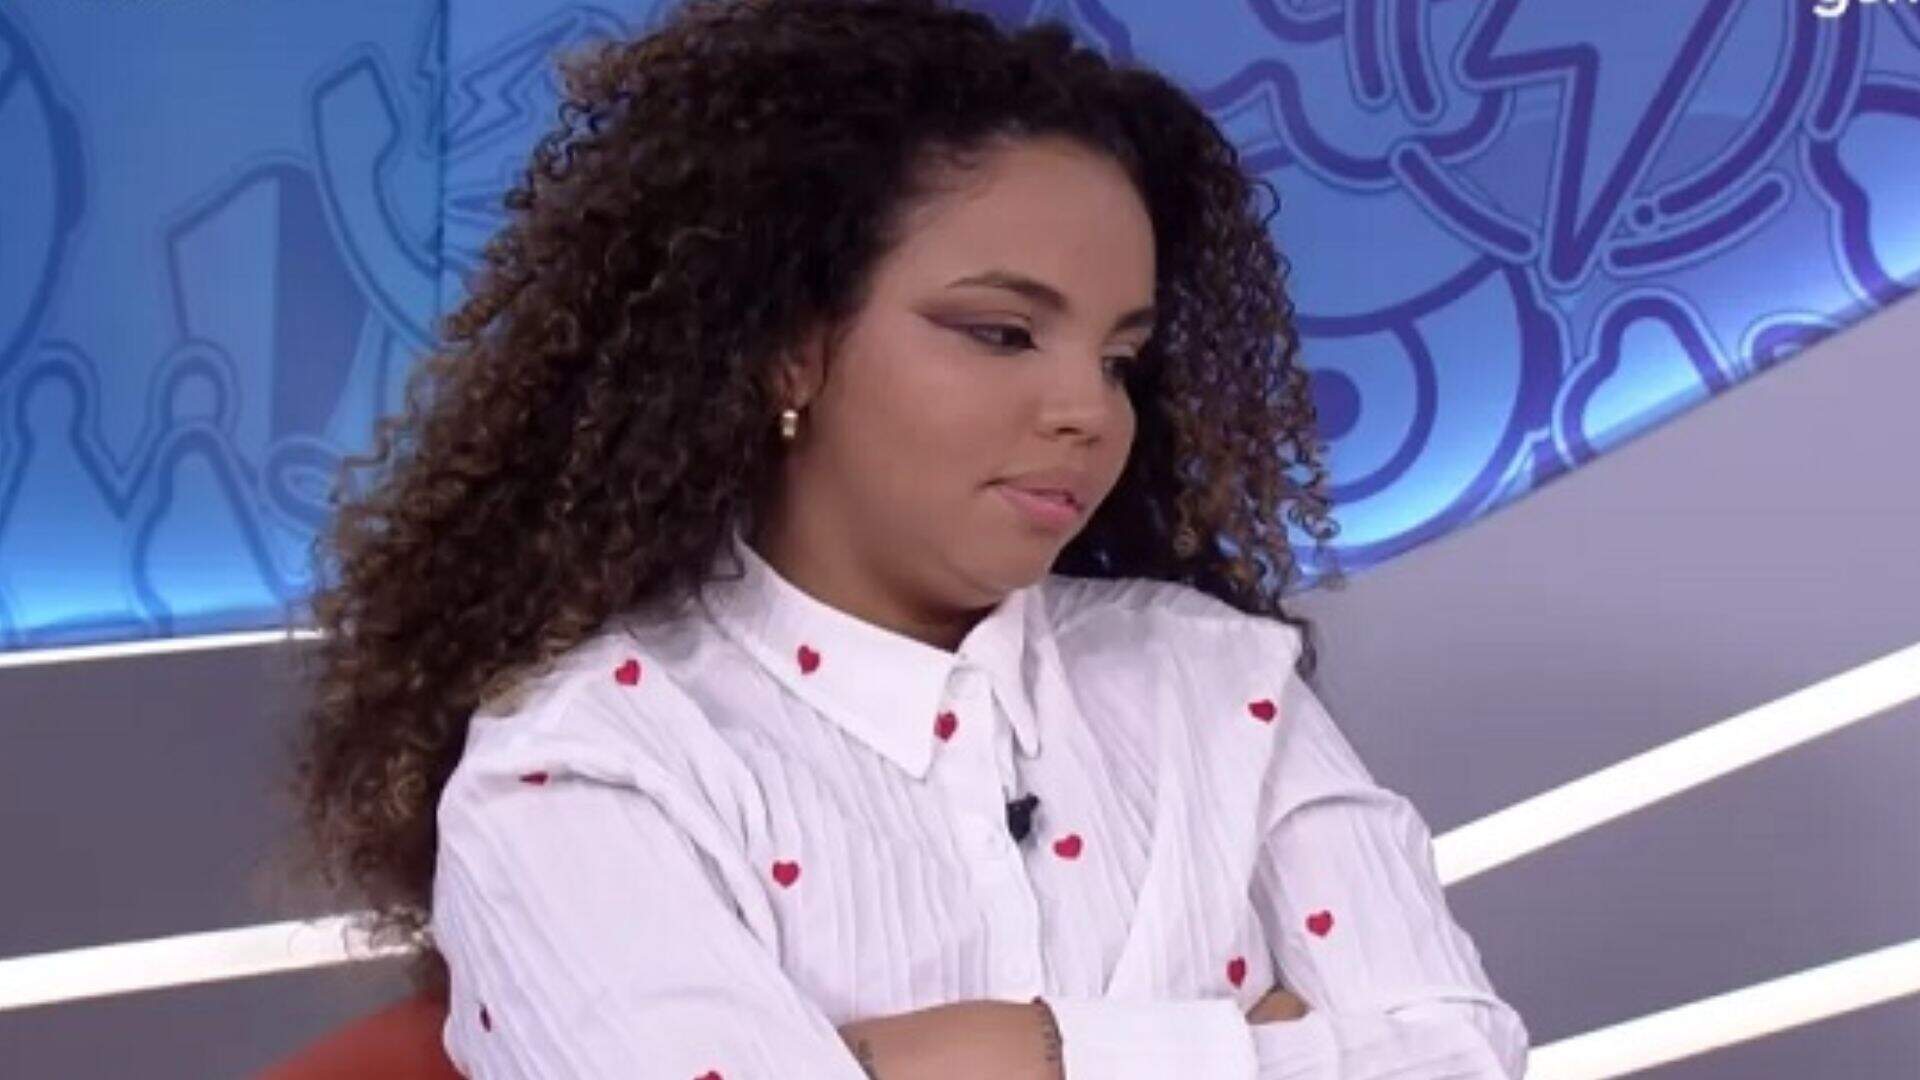 Eliminada do BBB 24, Pitel analisa vídeo e descobre ao vivo que foi furtada dentro do reality show - Metropolitana FM